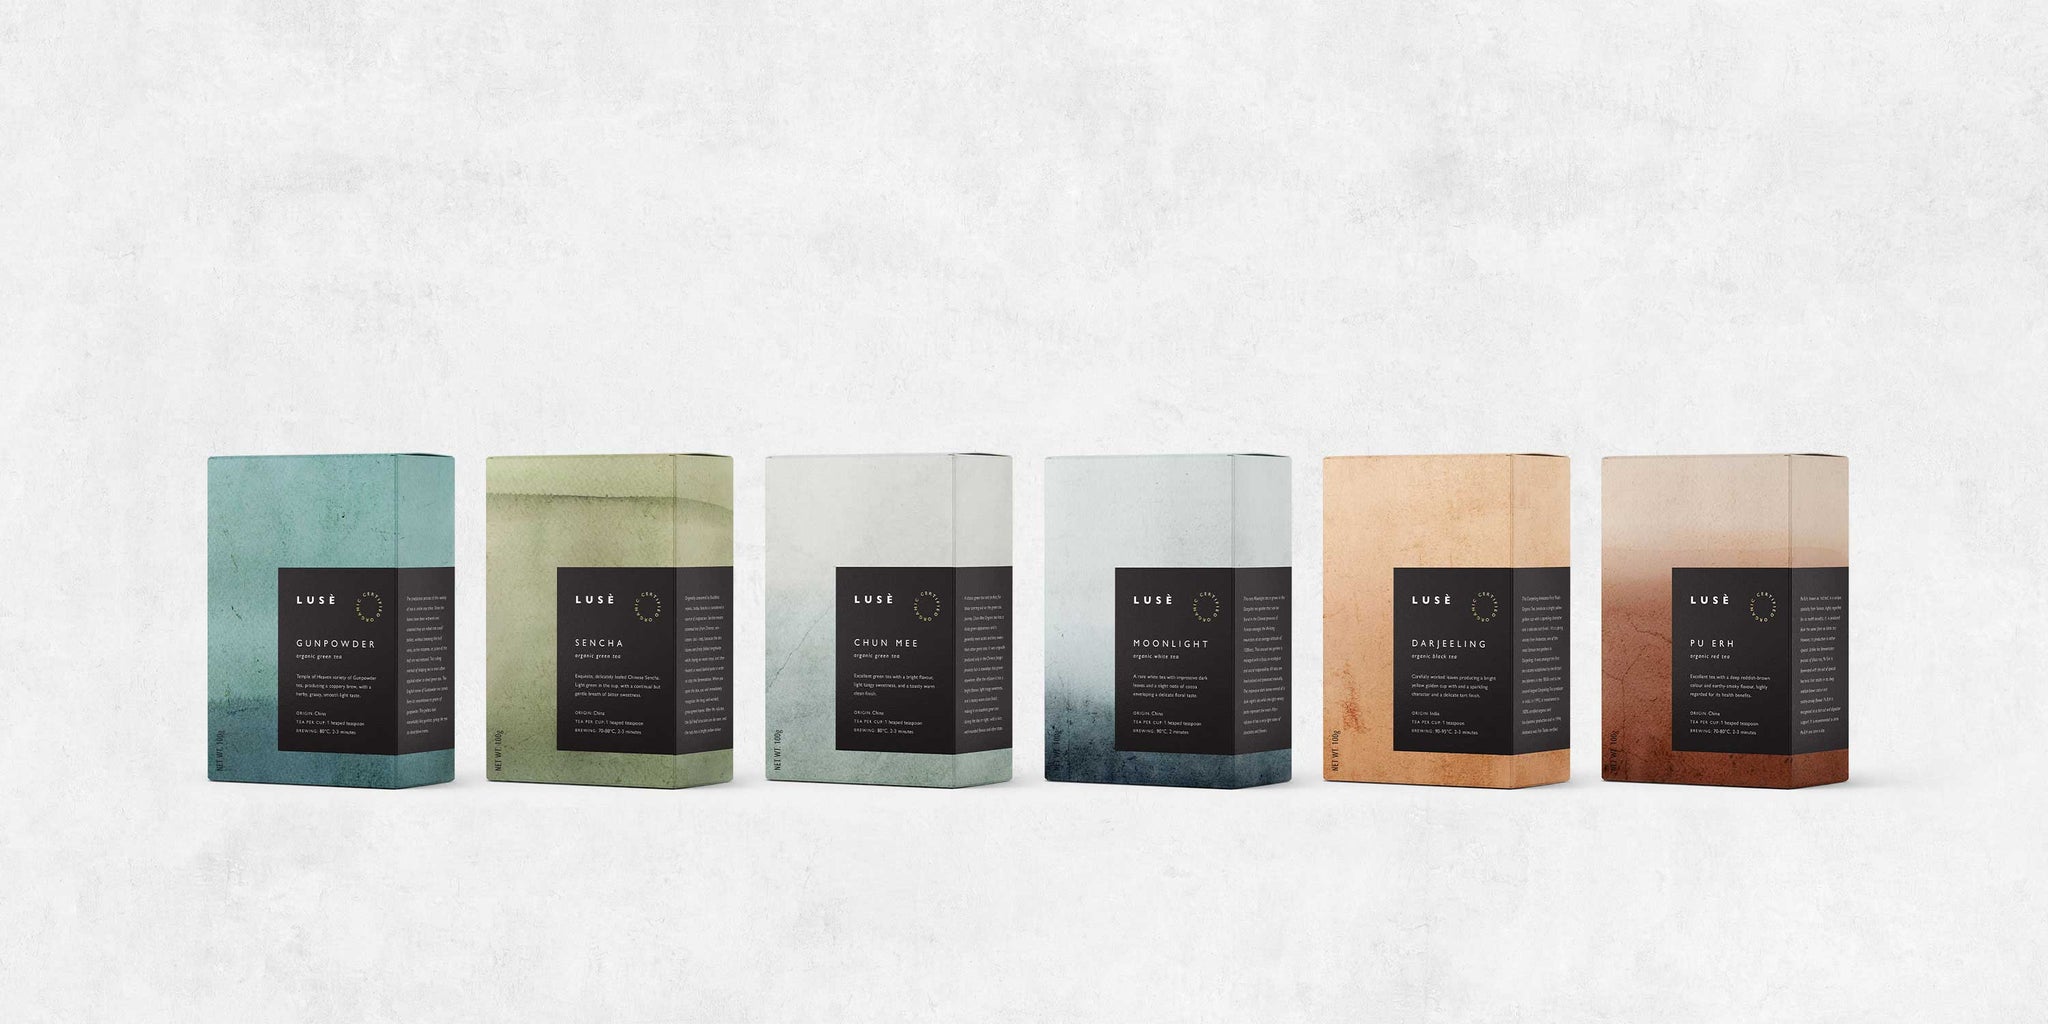 Karolina Król Studio modern packaging design collection for organic tea inspired by abstract art